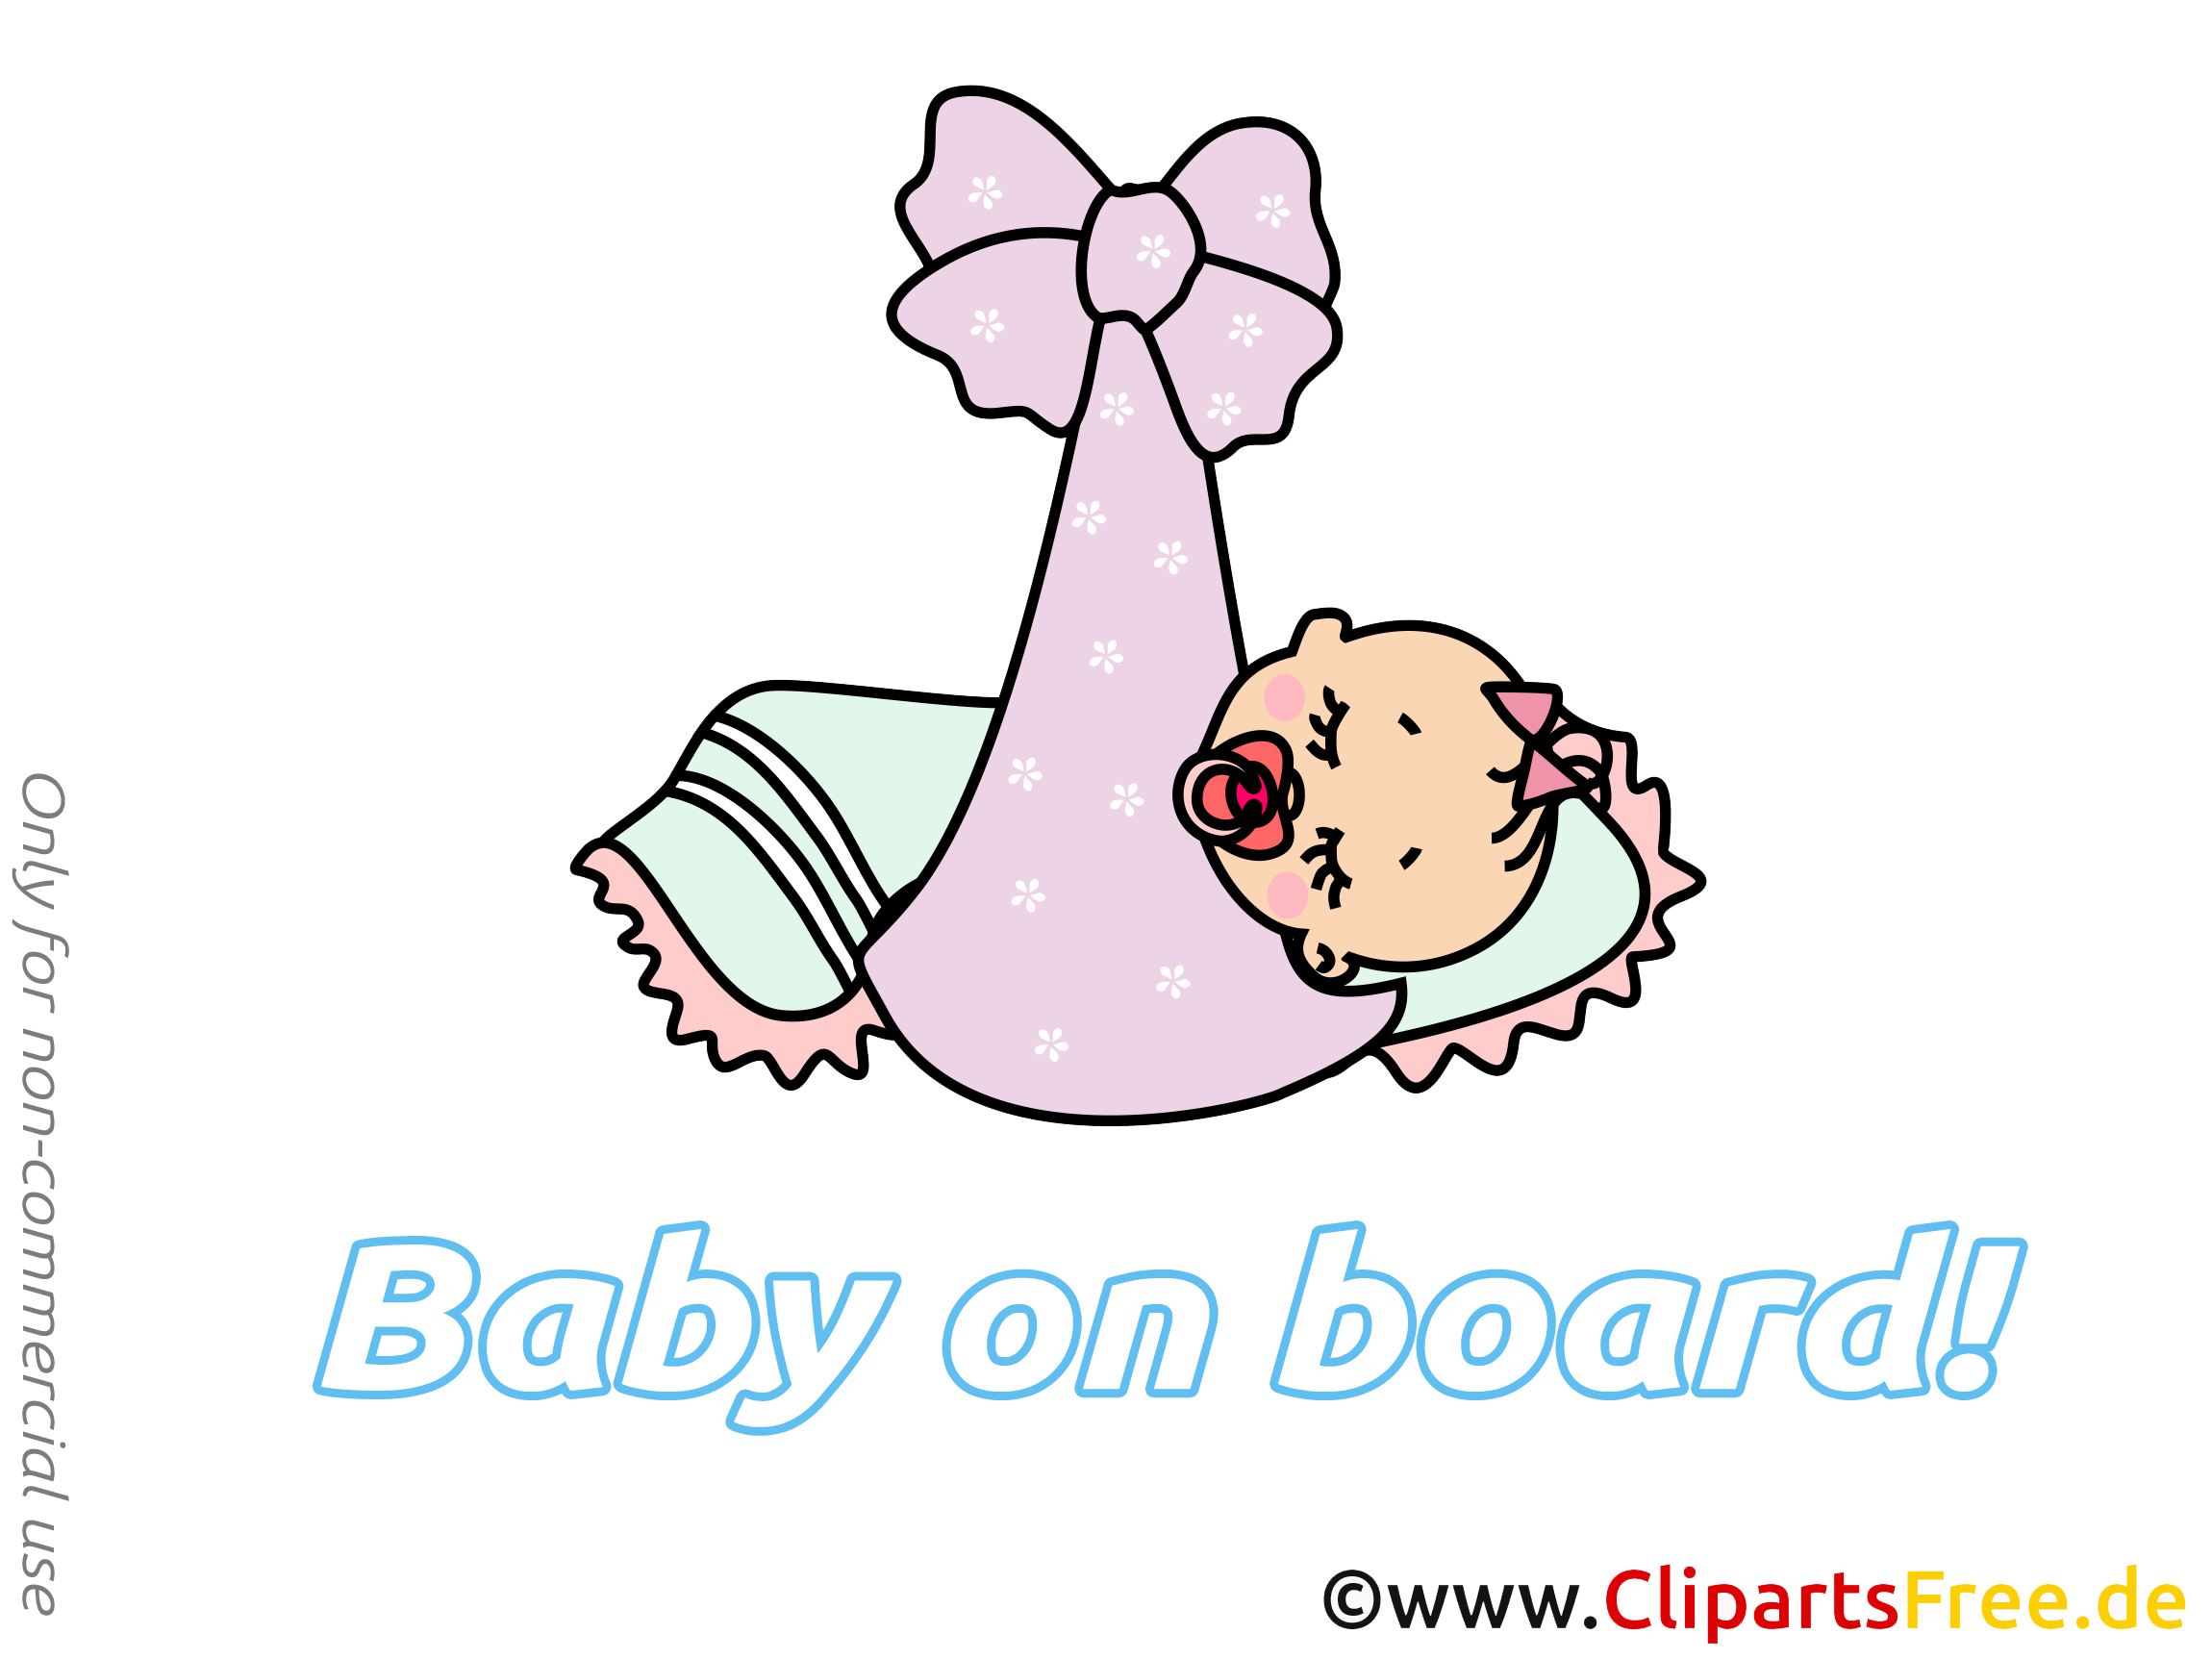 Enfant dort illustration – Bébé à bord images